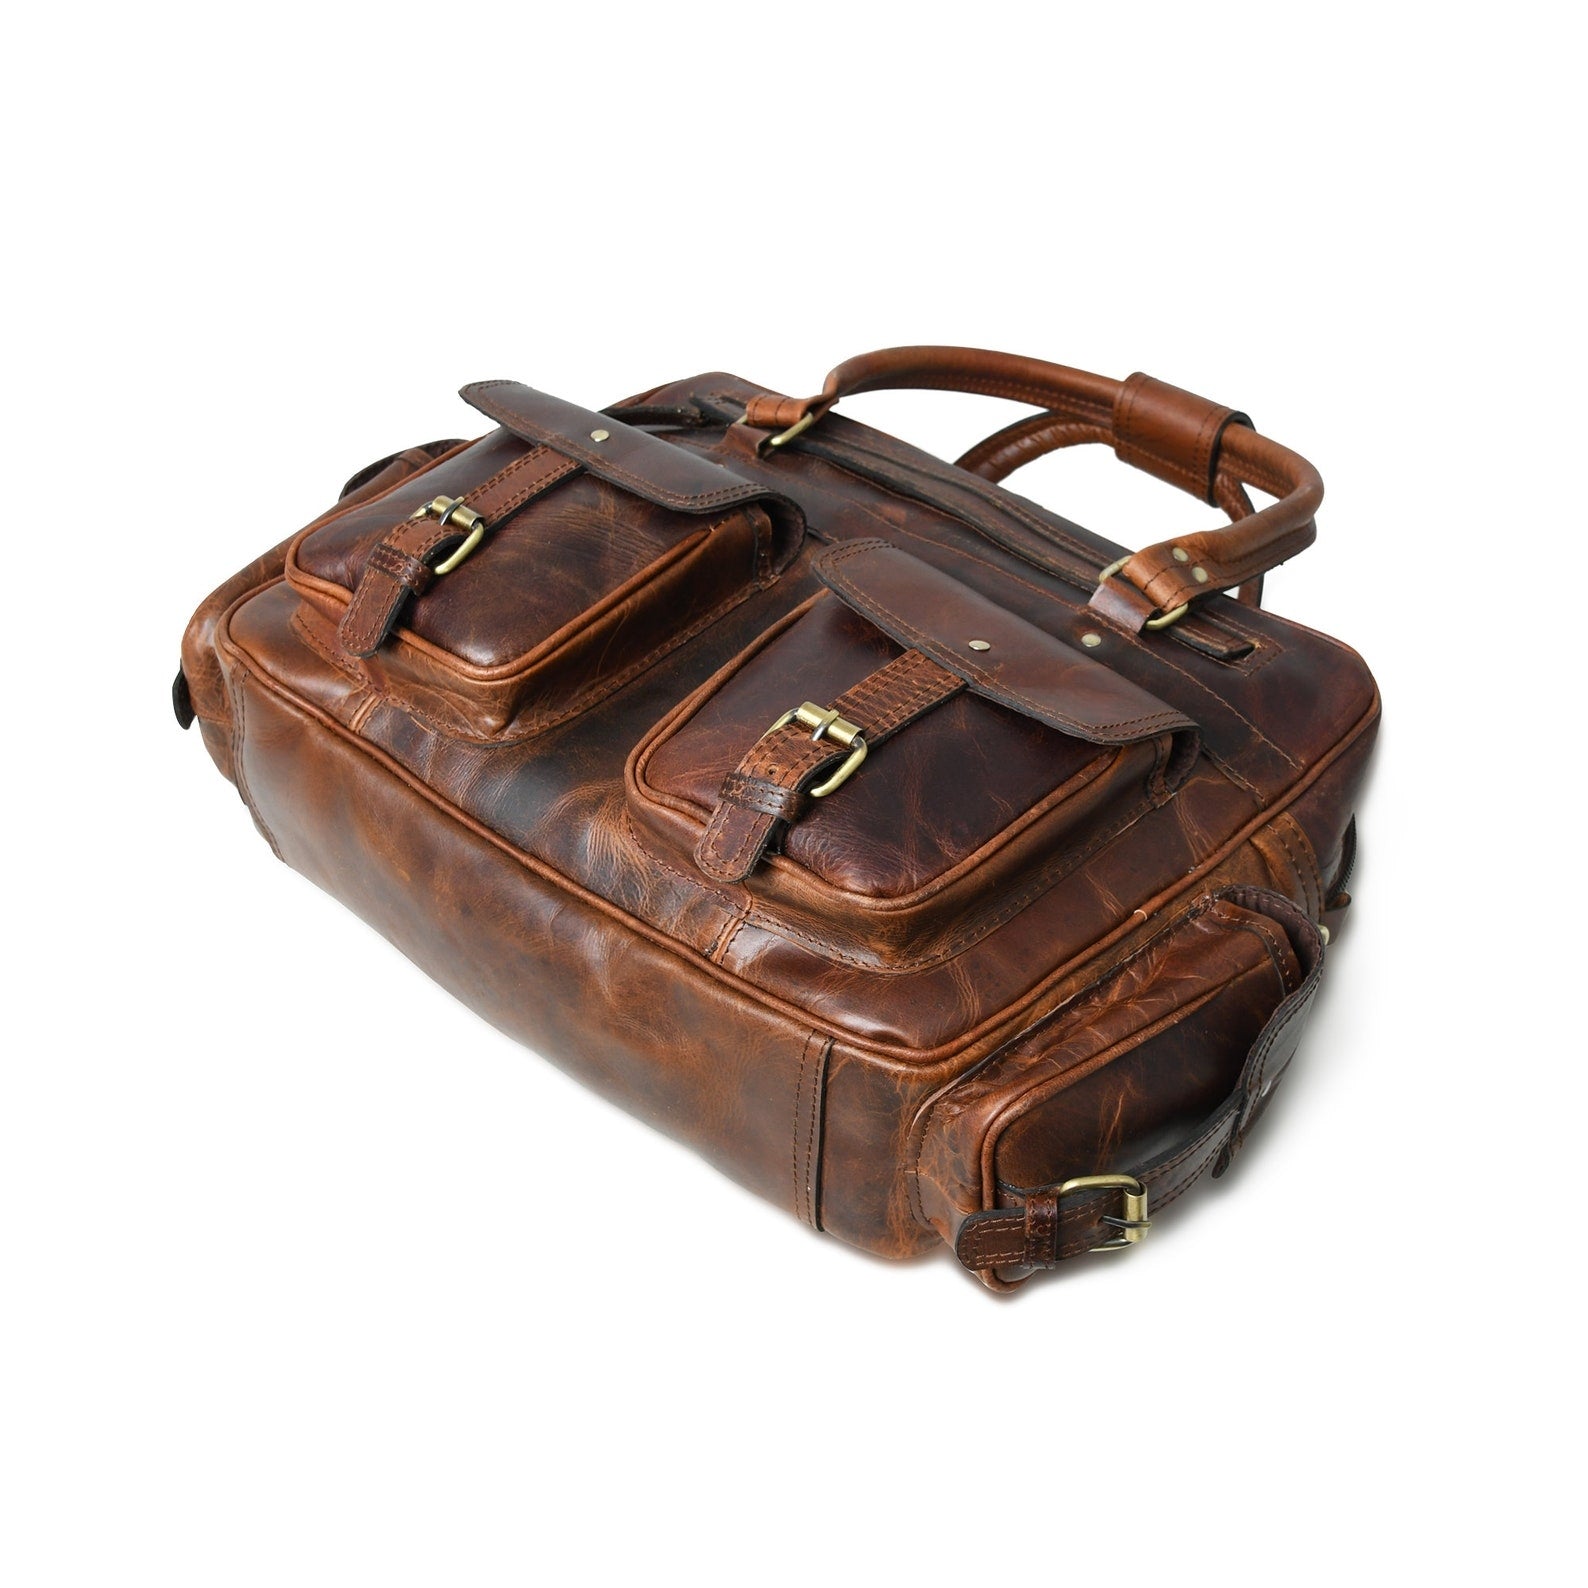 Wilson Leather Pilot Briefcase